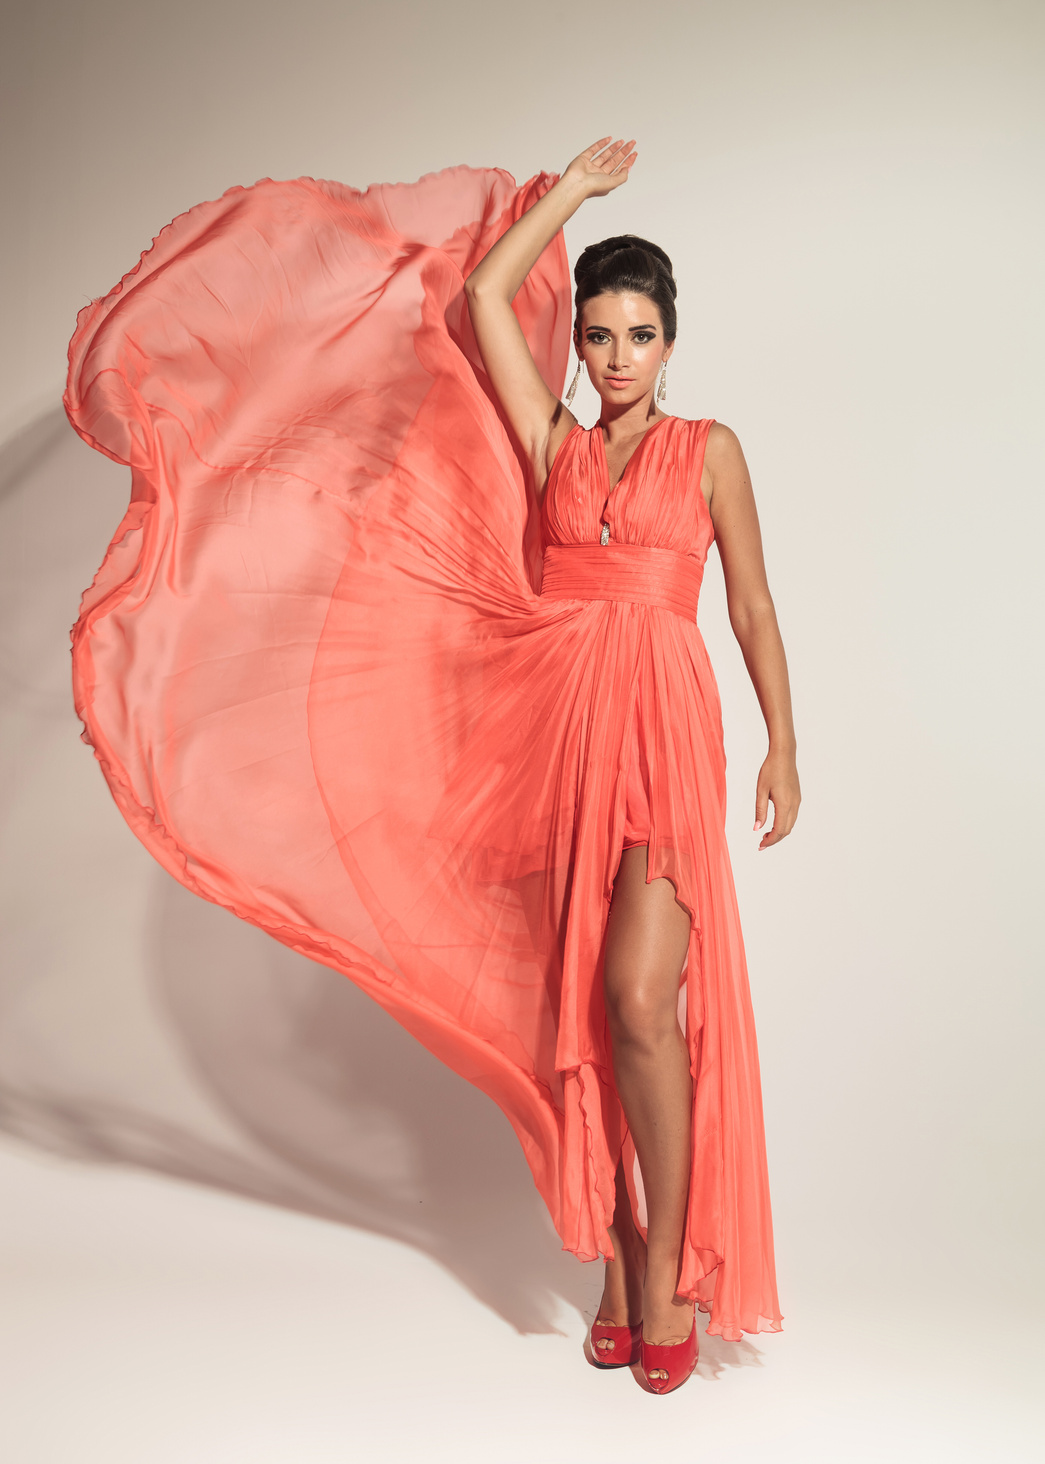 elegant fashion woman fluttering her coral dress